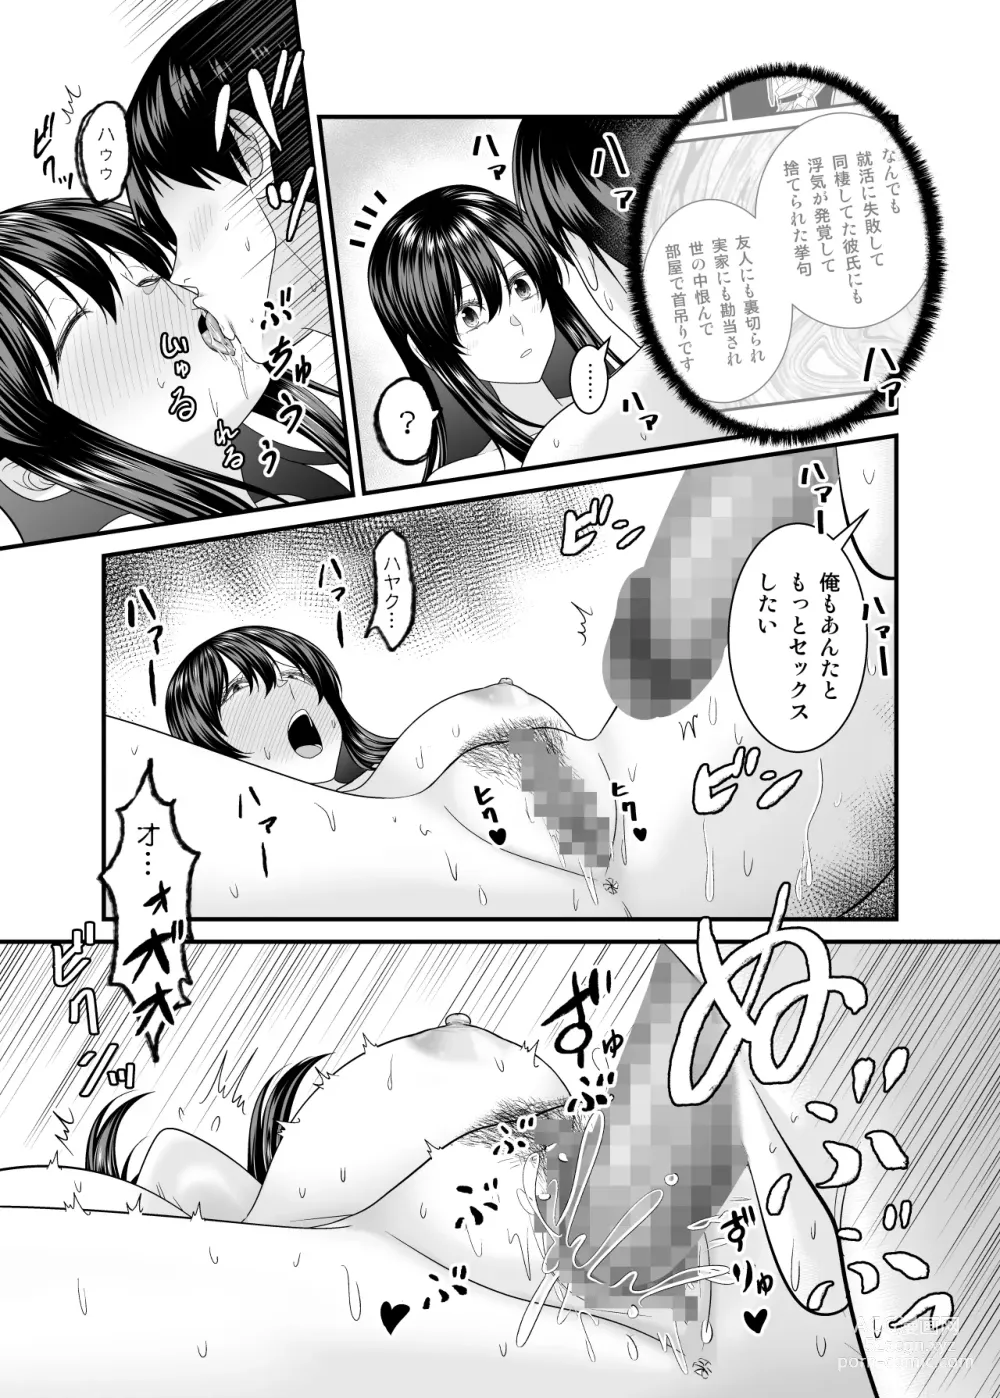 Page 38 of doujinshi ヤバい事故物件に女幽霊が出たけど無職底辺の俺はセックスしまくる